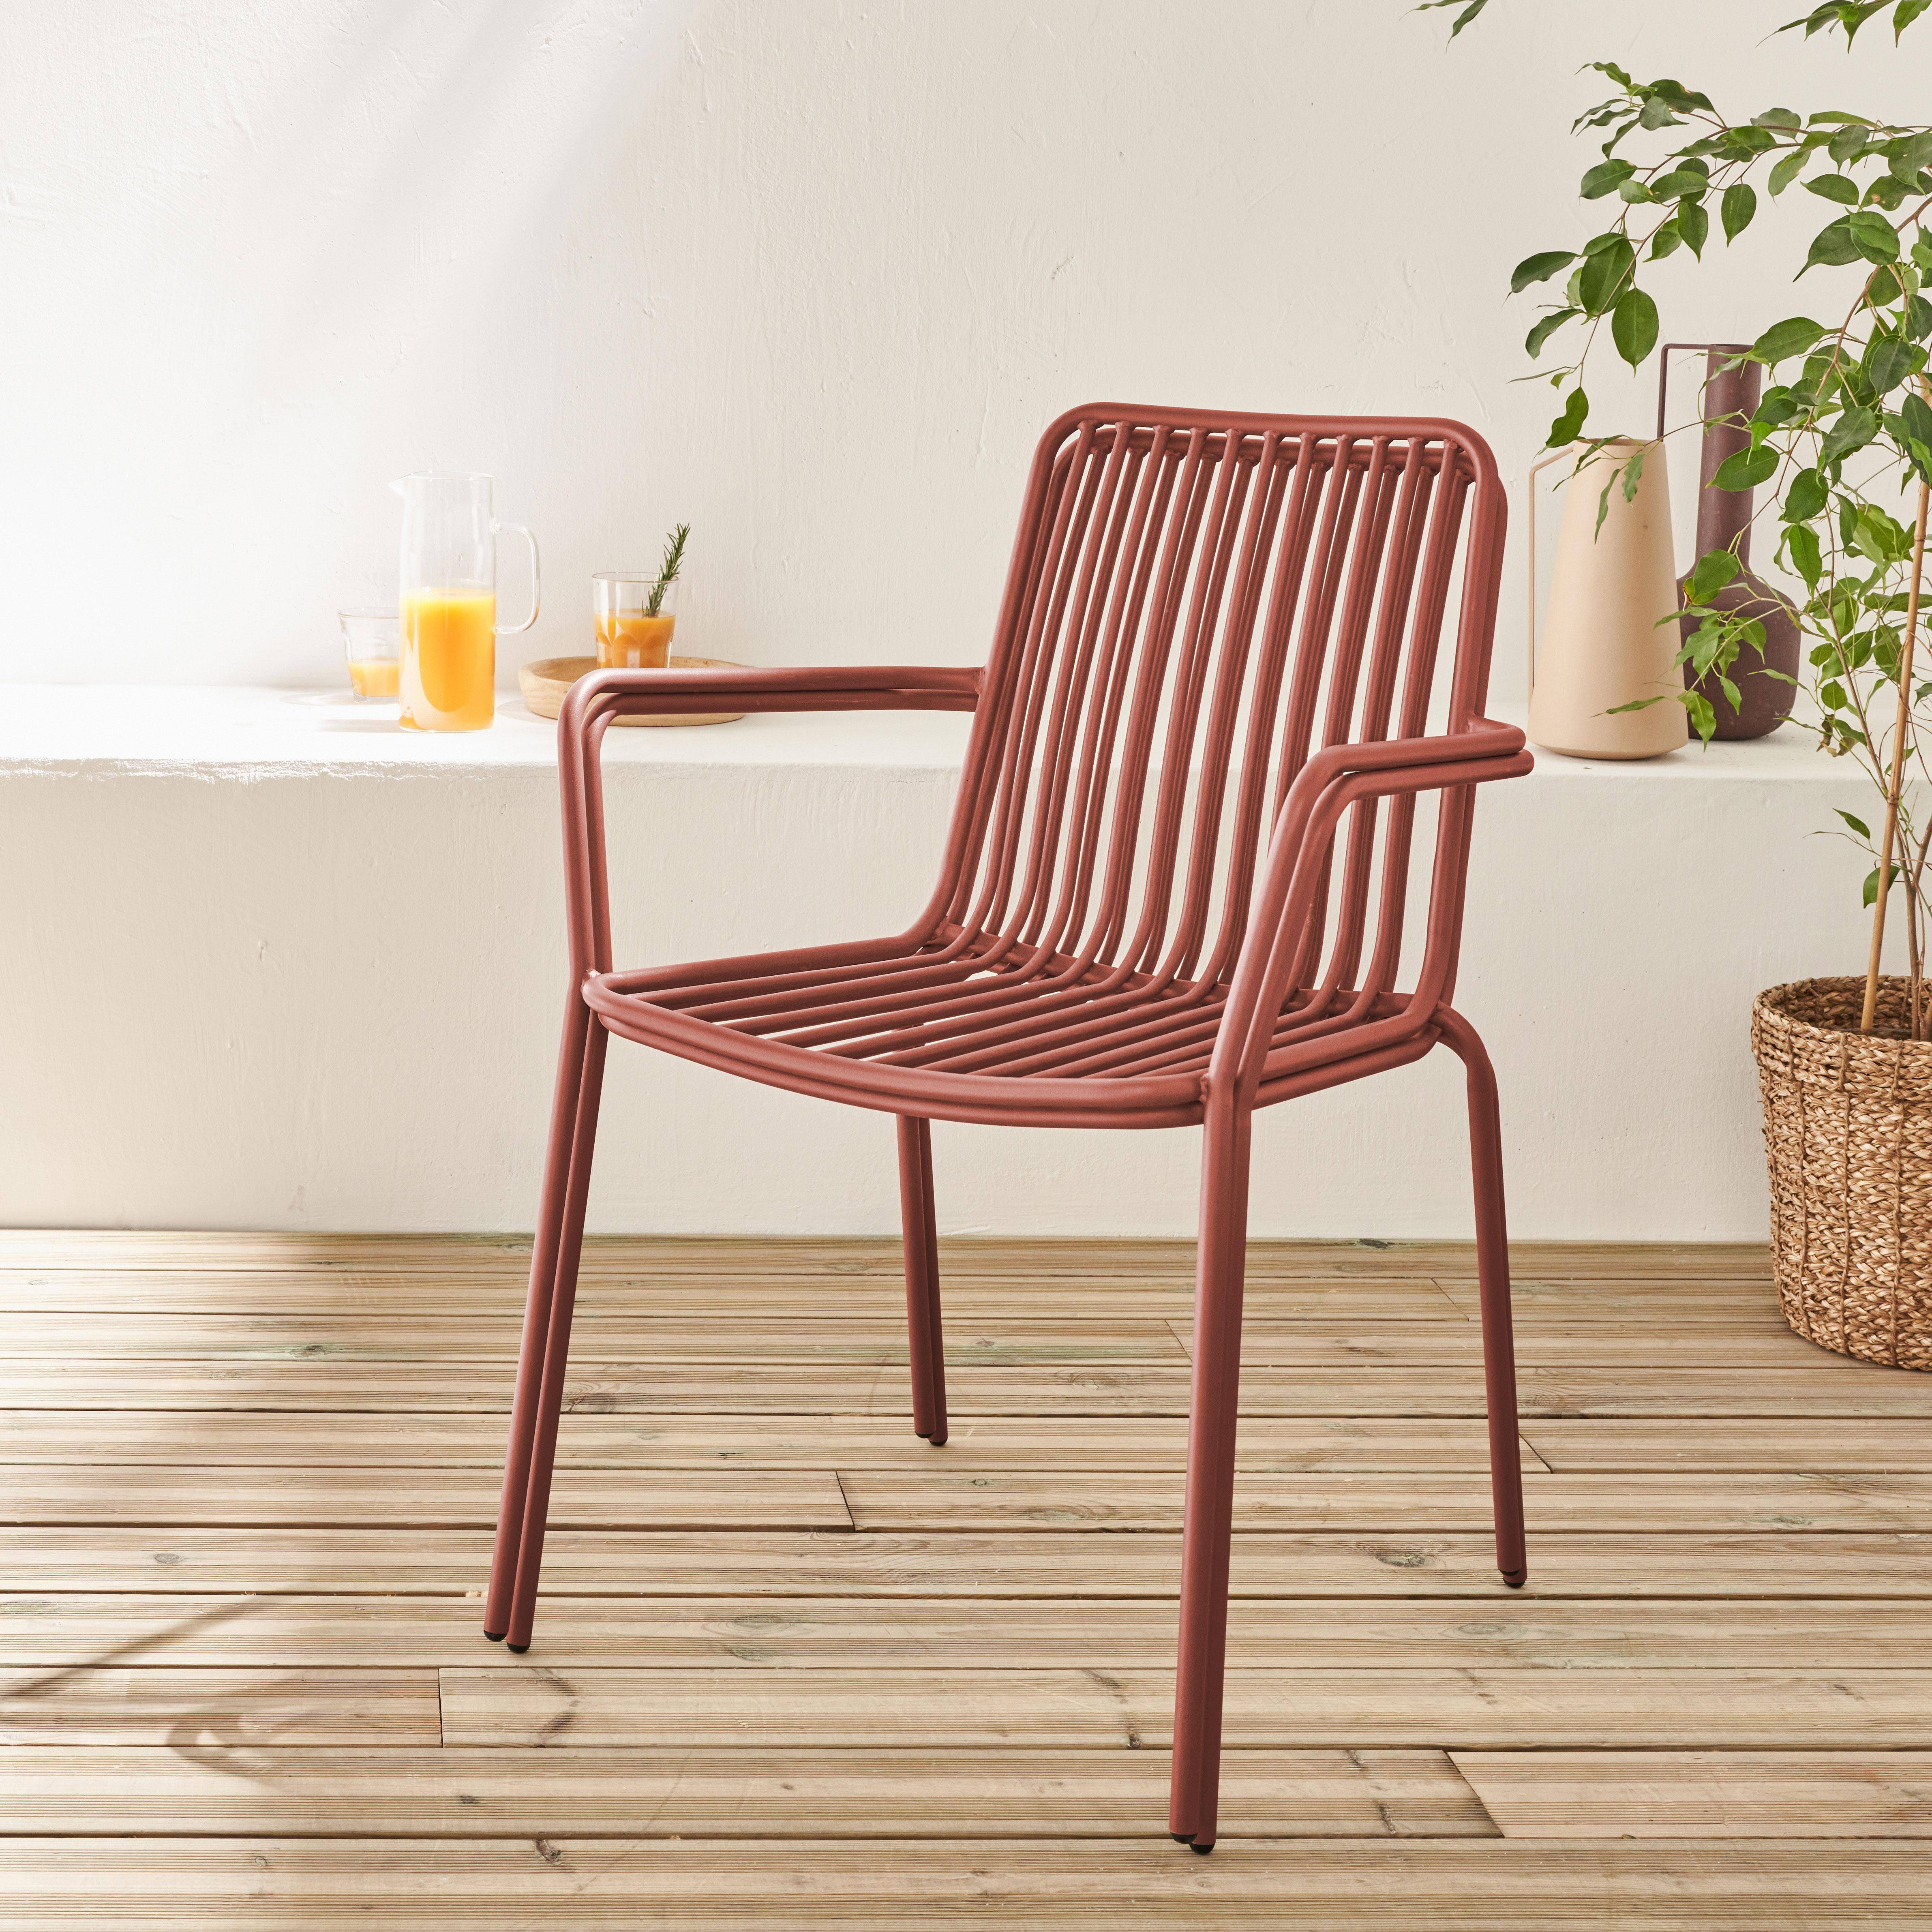 2er Set stapelbare terrakottafarbene Stühle aus Stahl, mit Armlehnen - Florida Photo2